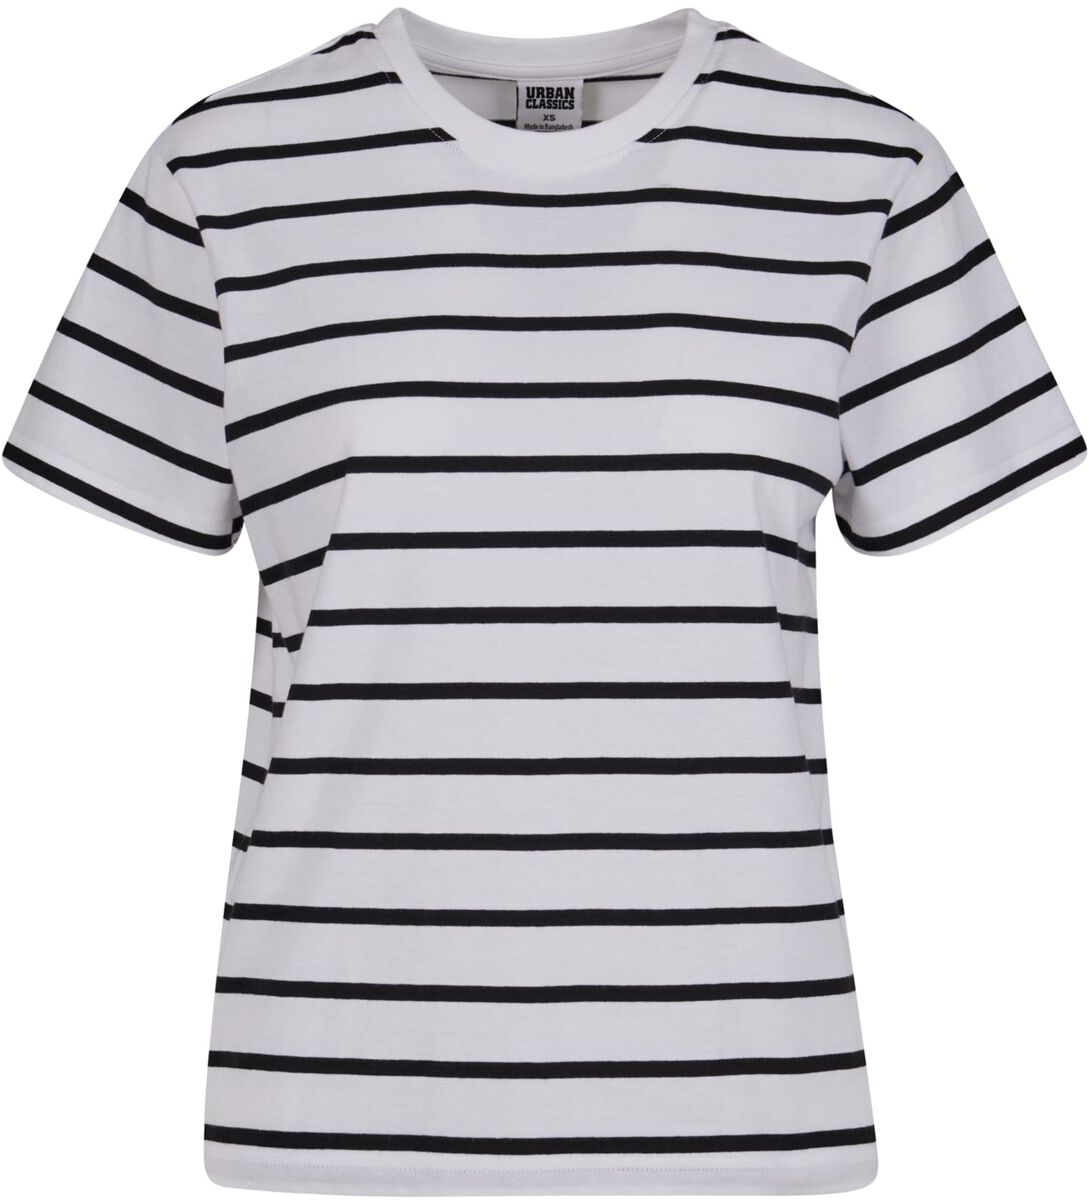 Urban Classics Ladies Striped Boxy Tee T-Shirt schwarz weiß in M